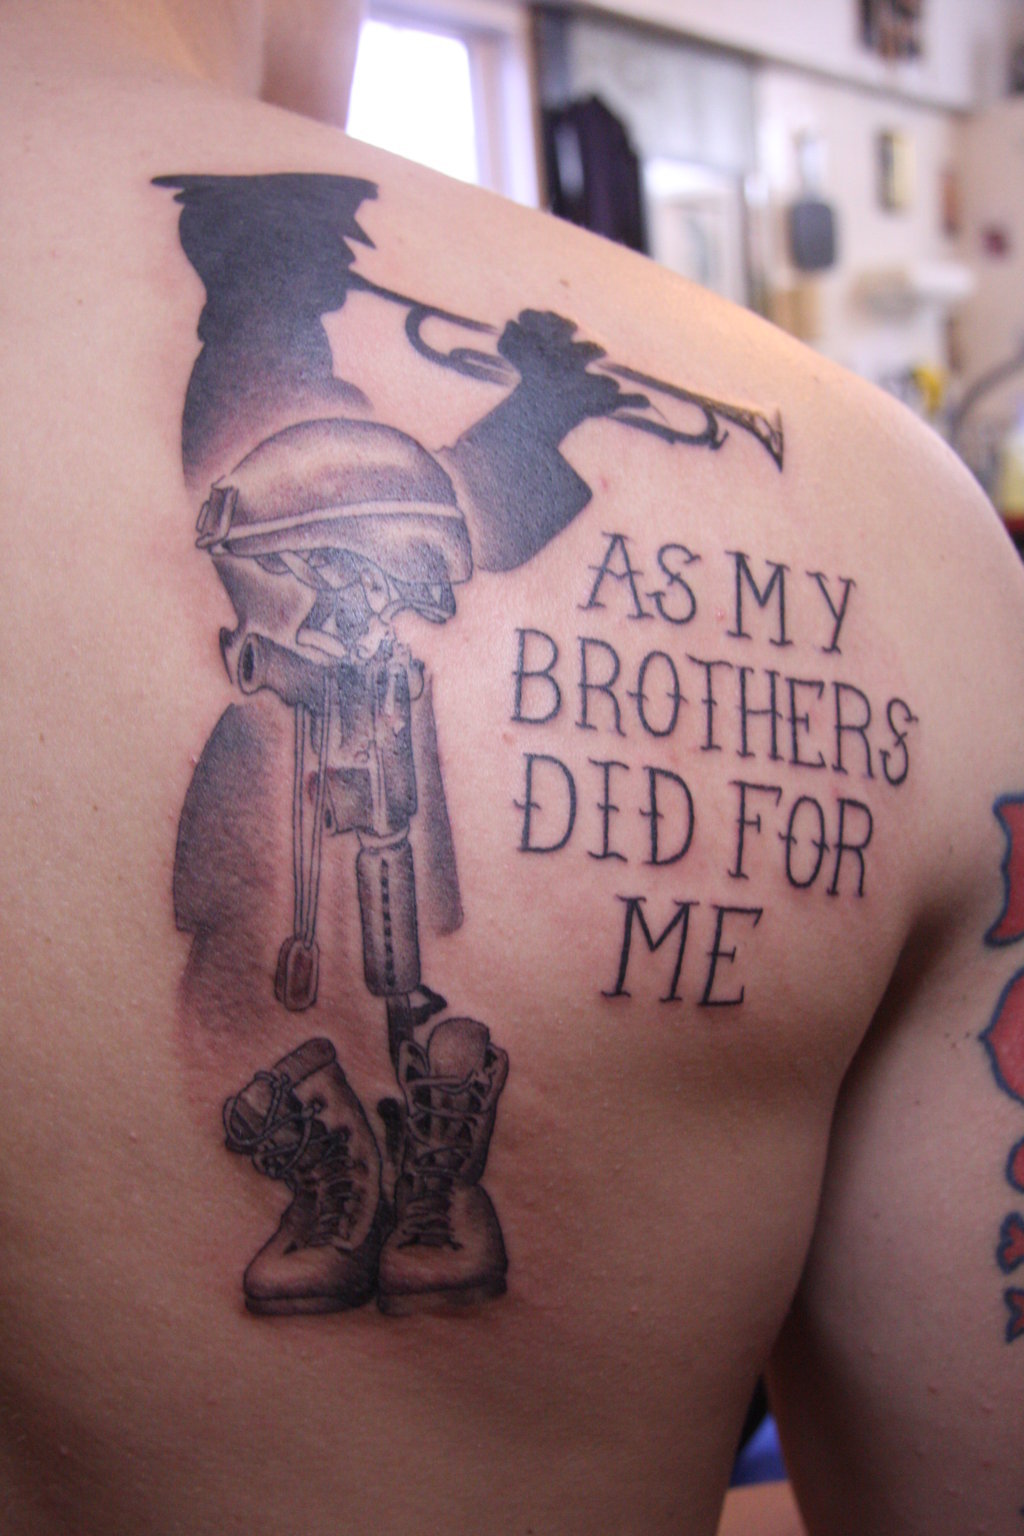 shoulder blade cross tattoos for men